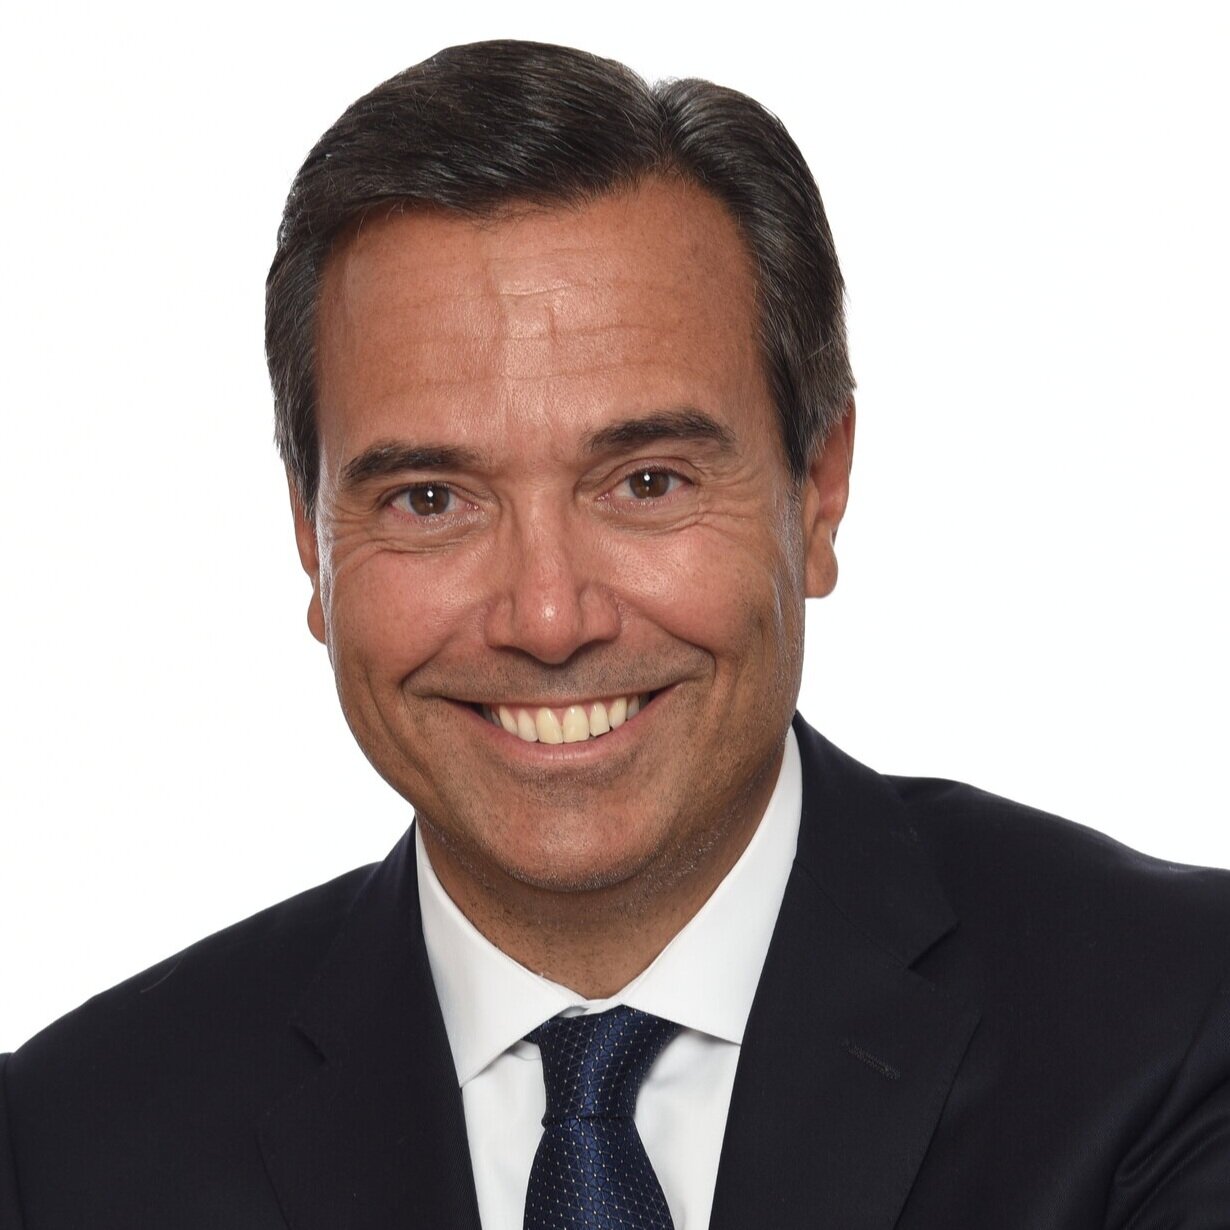 António Horta-Osório, Lloyds Banking Group